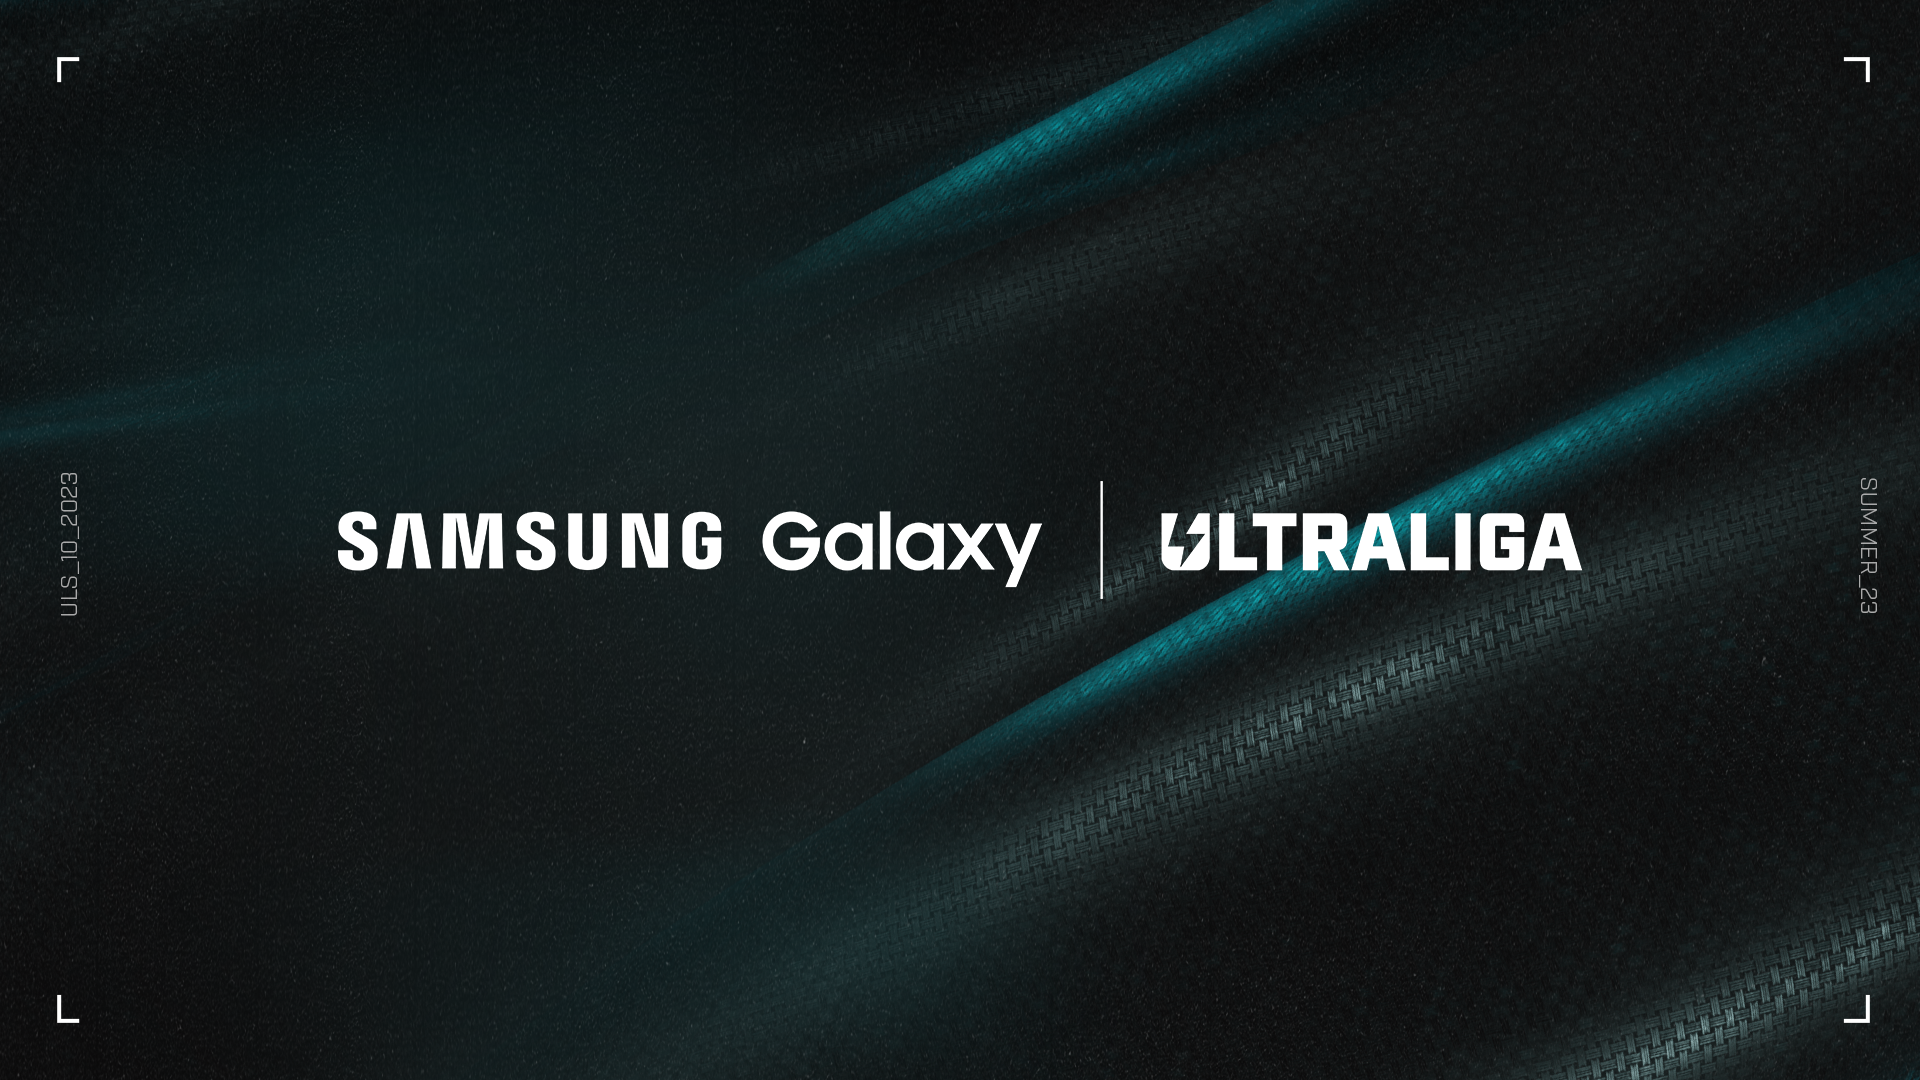 Samsung partnerem tytularnym turnieju Ultraliga